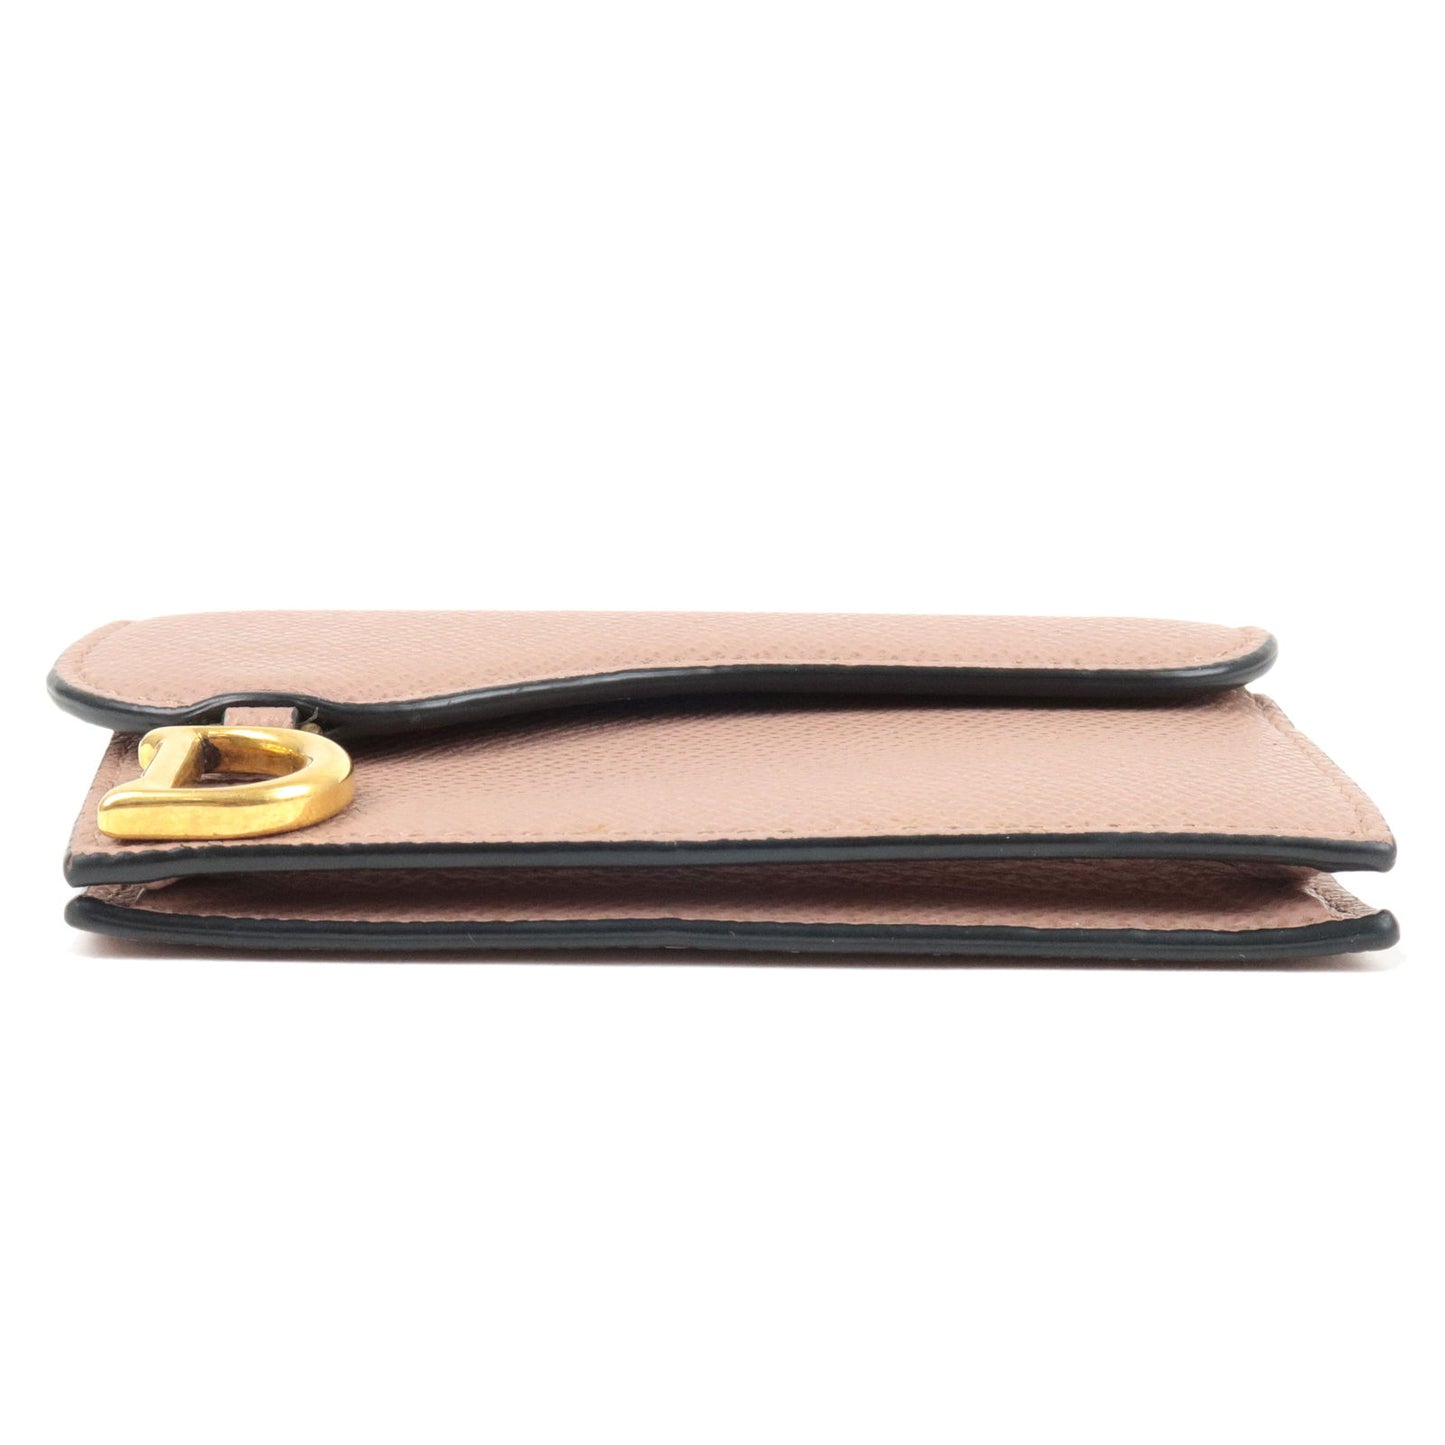 Christian Dior Leather Saddle Flap Card Case Pink Beige